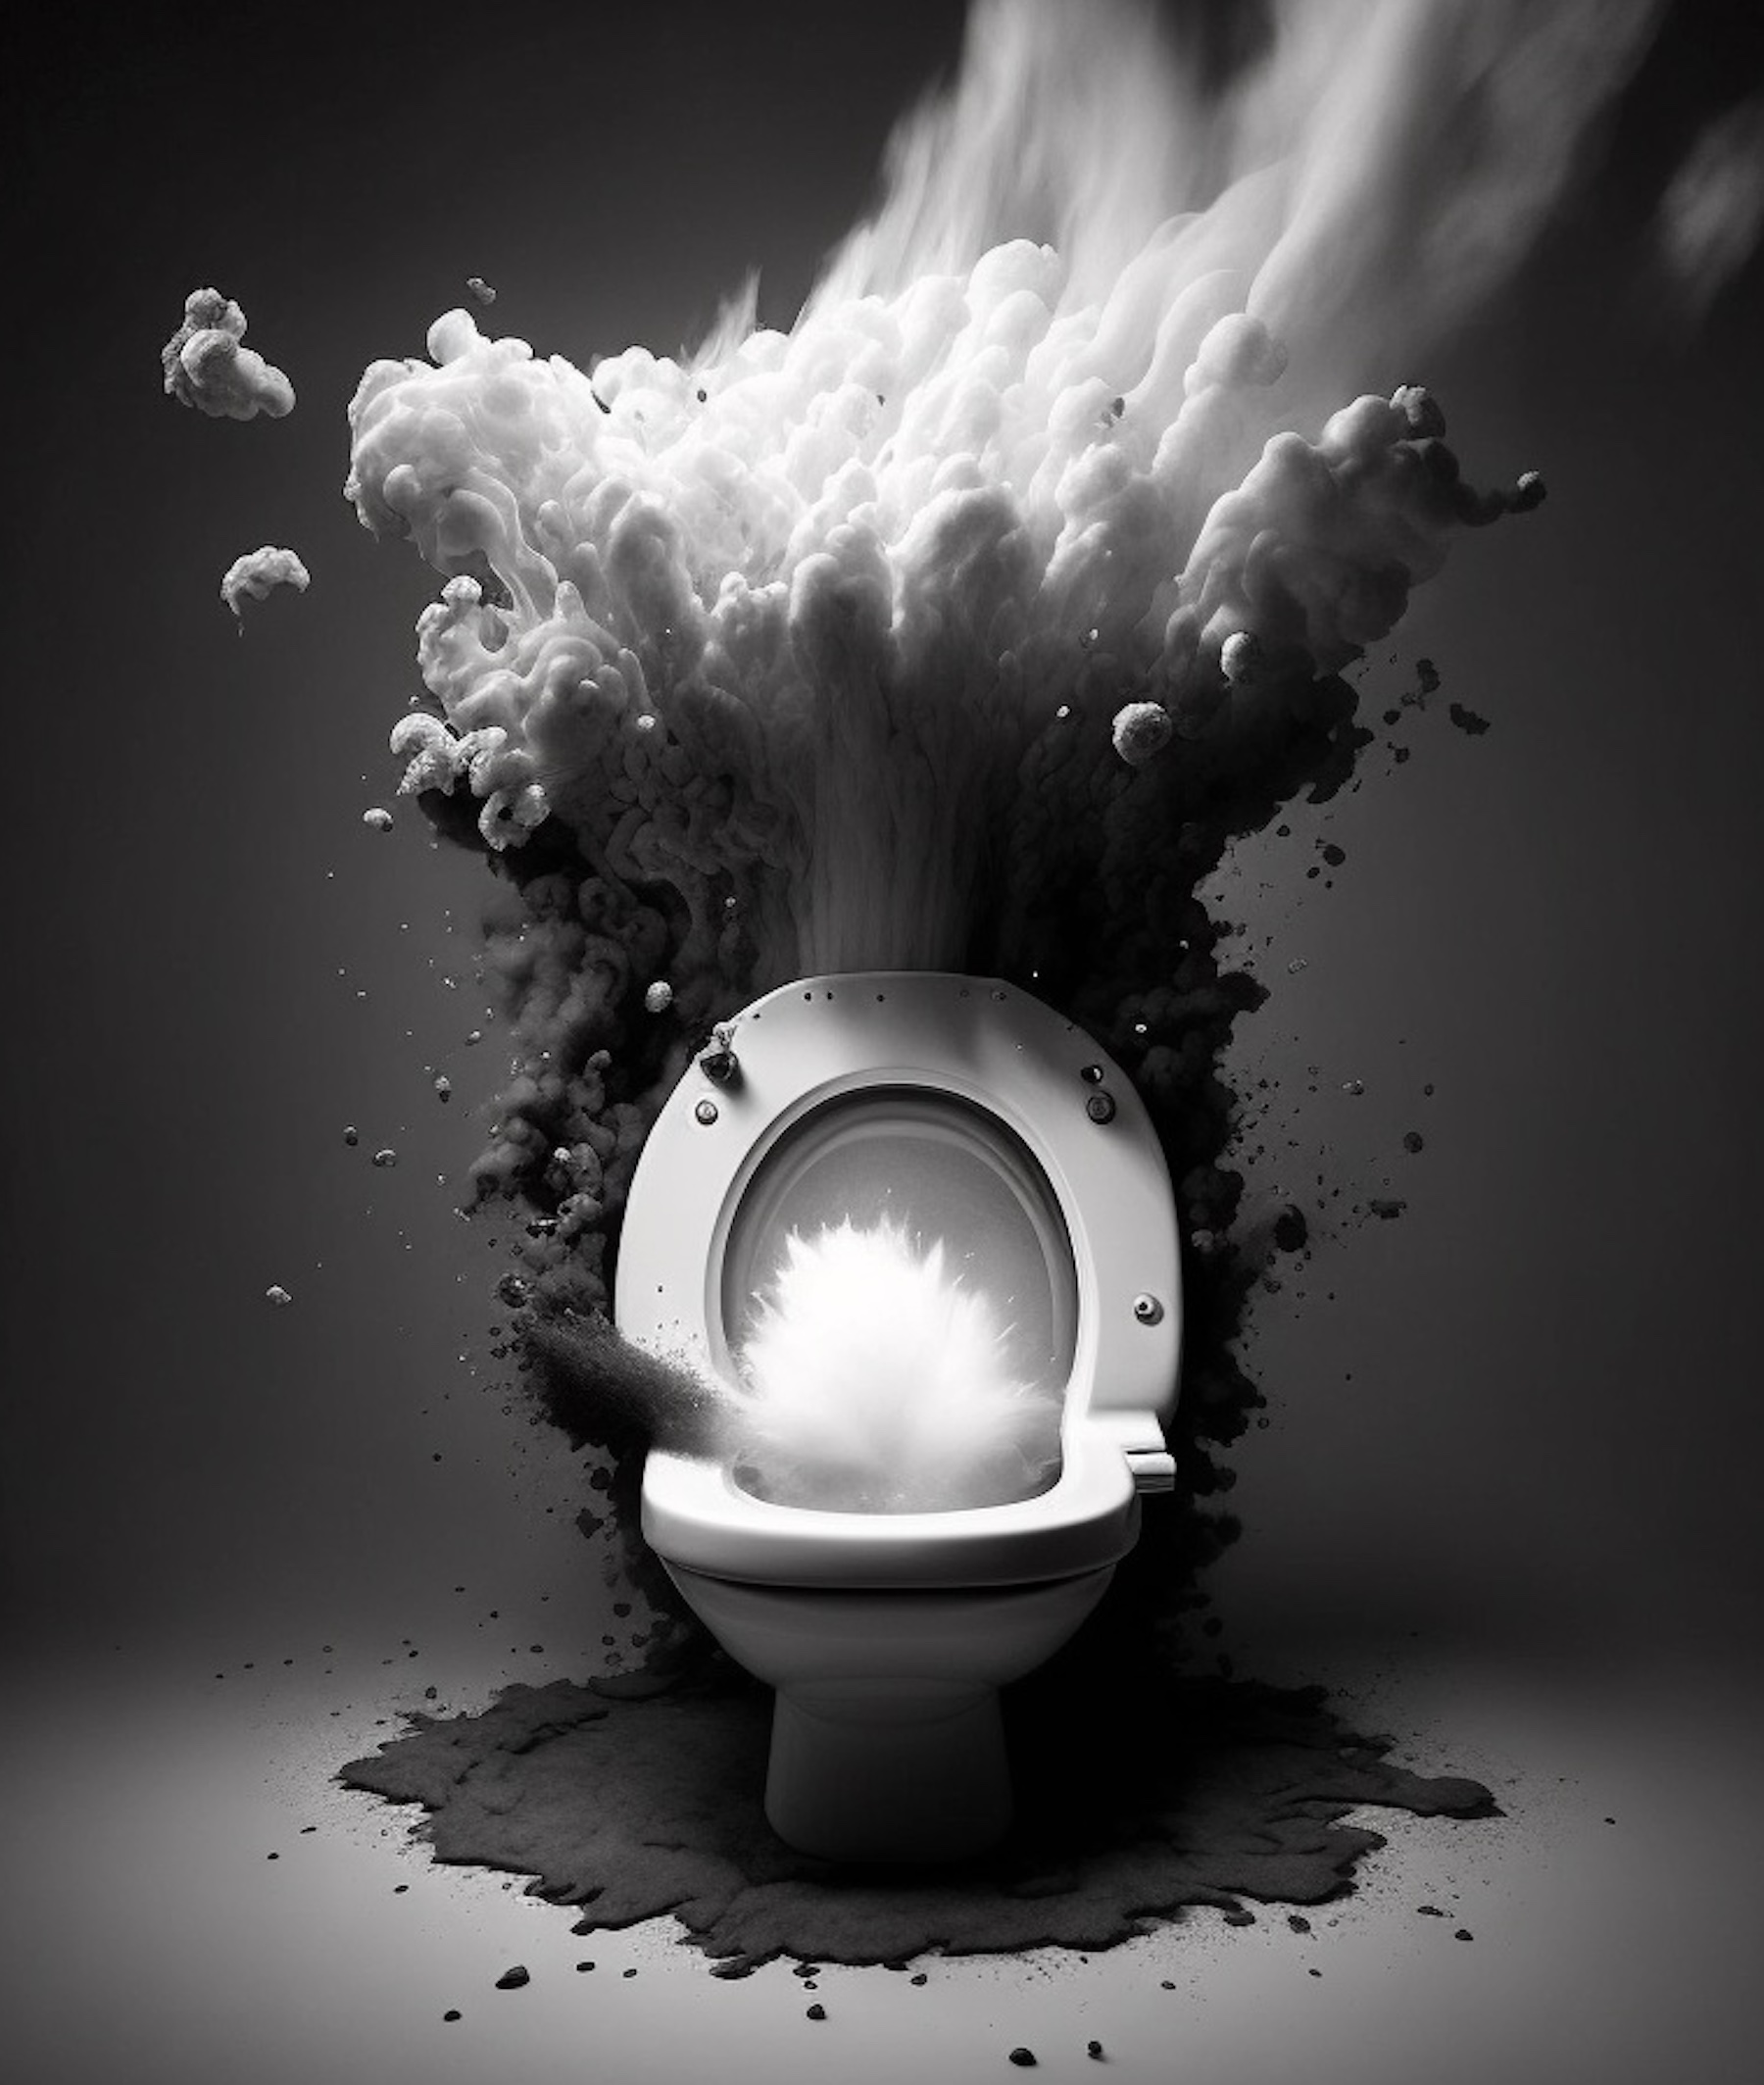 The Enlightened Defecator destroys toilet